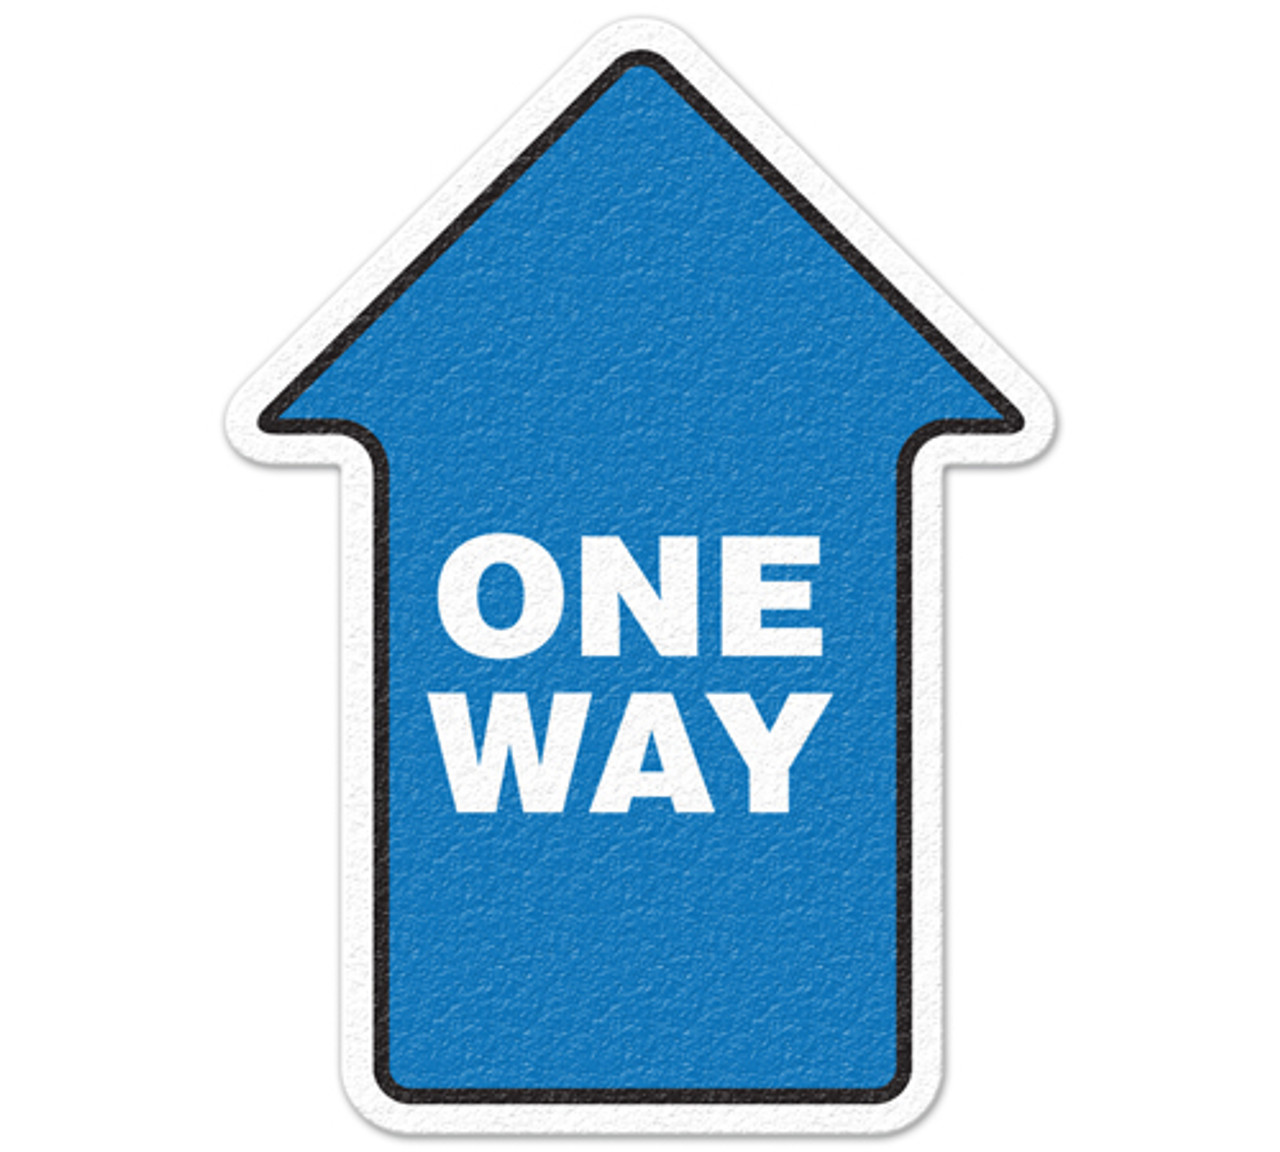 ONE WAY - Blue Anti Slip Arrow Floor Sign - One Way Sign